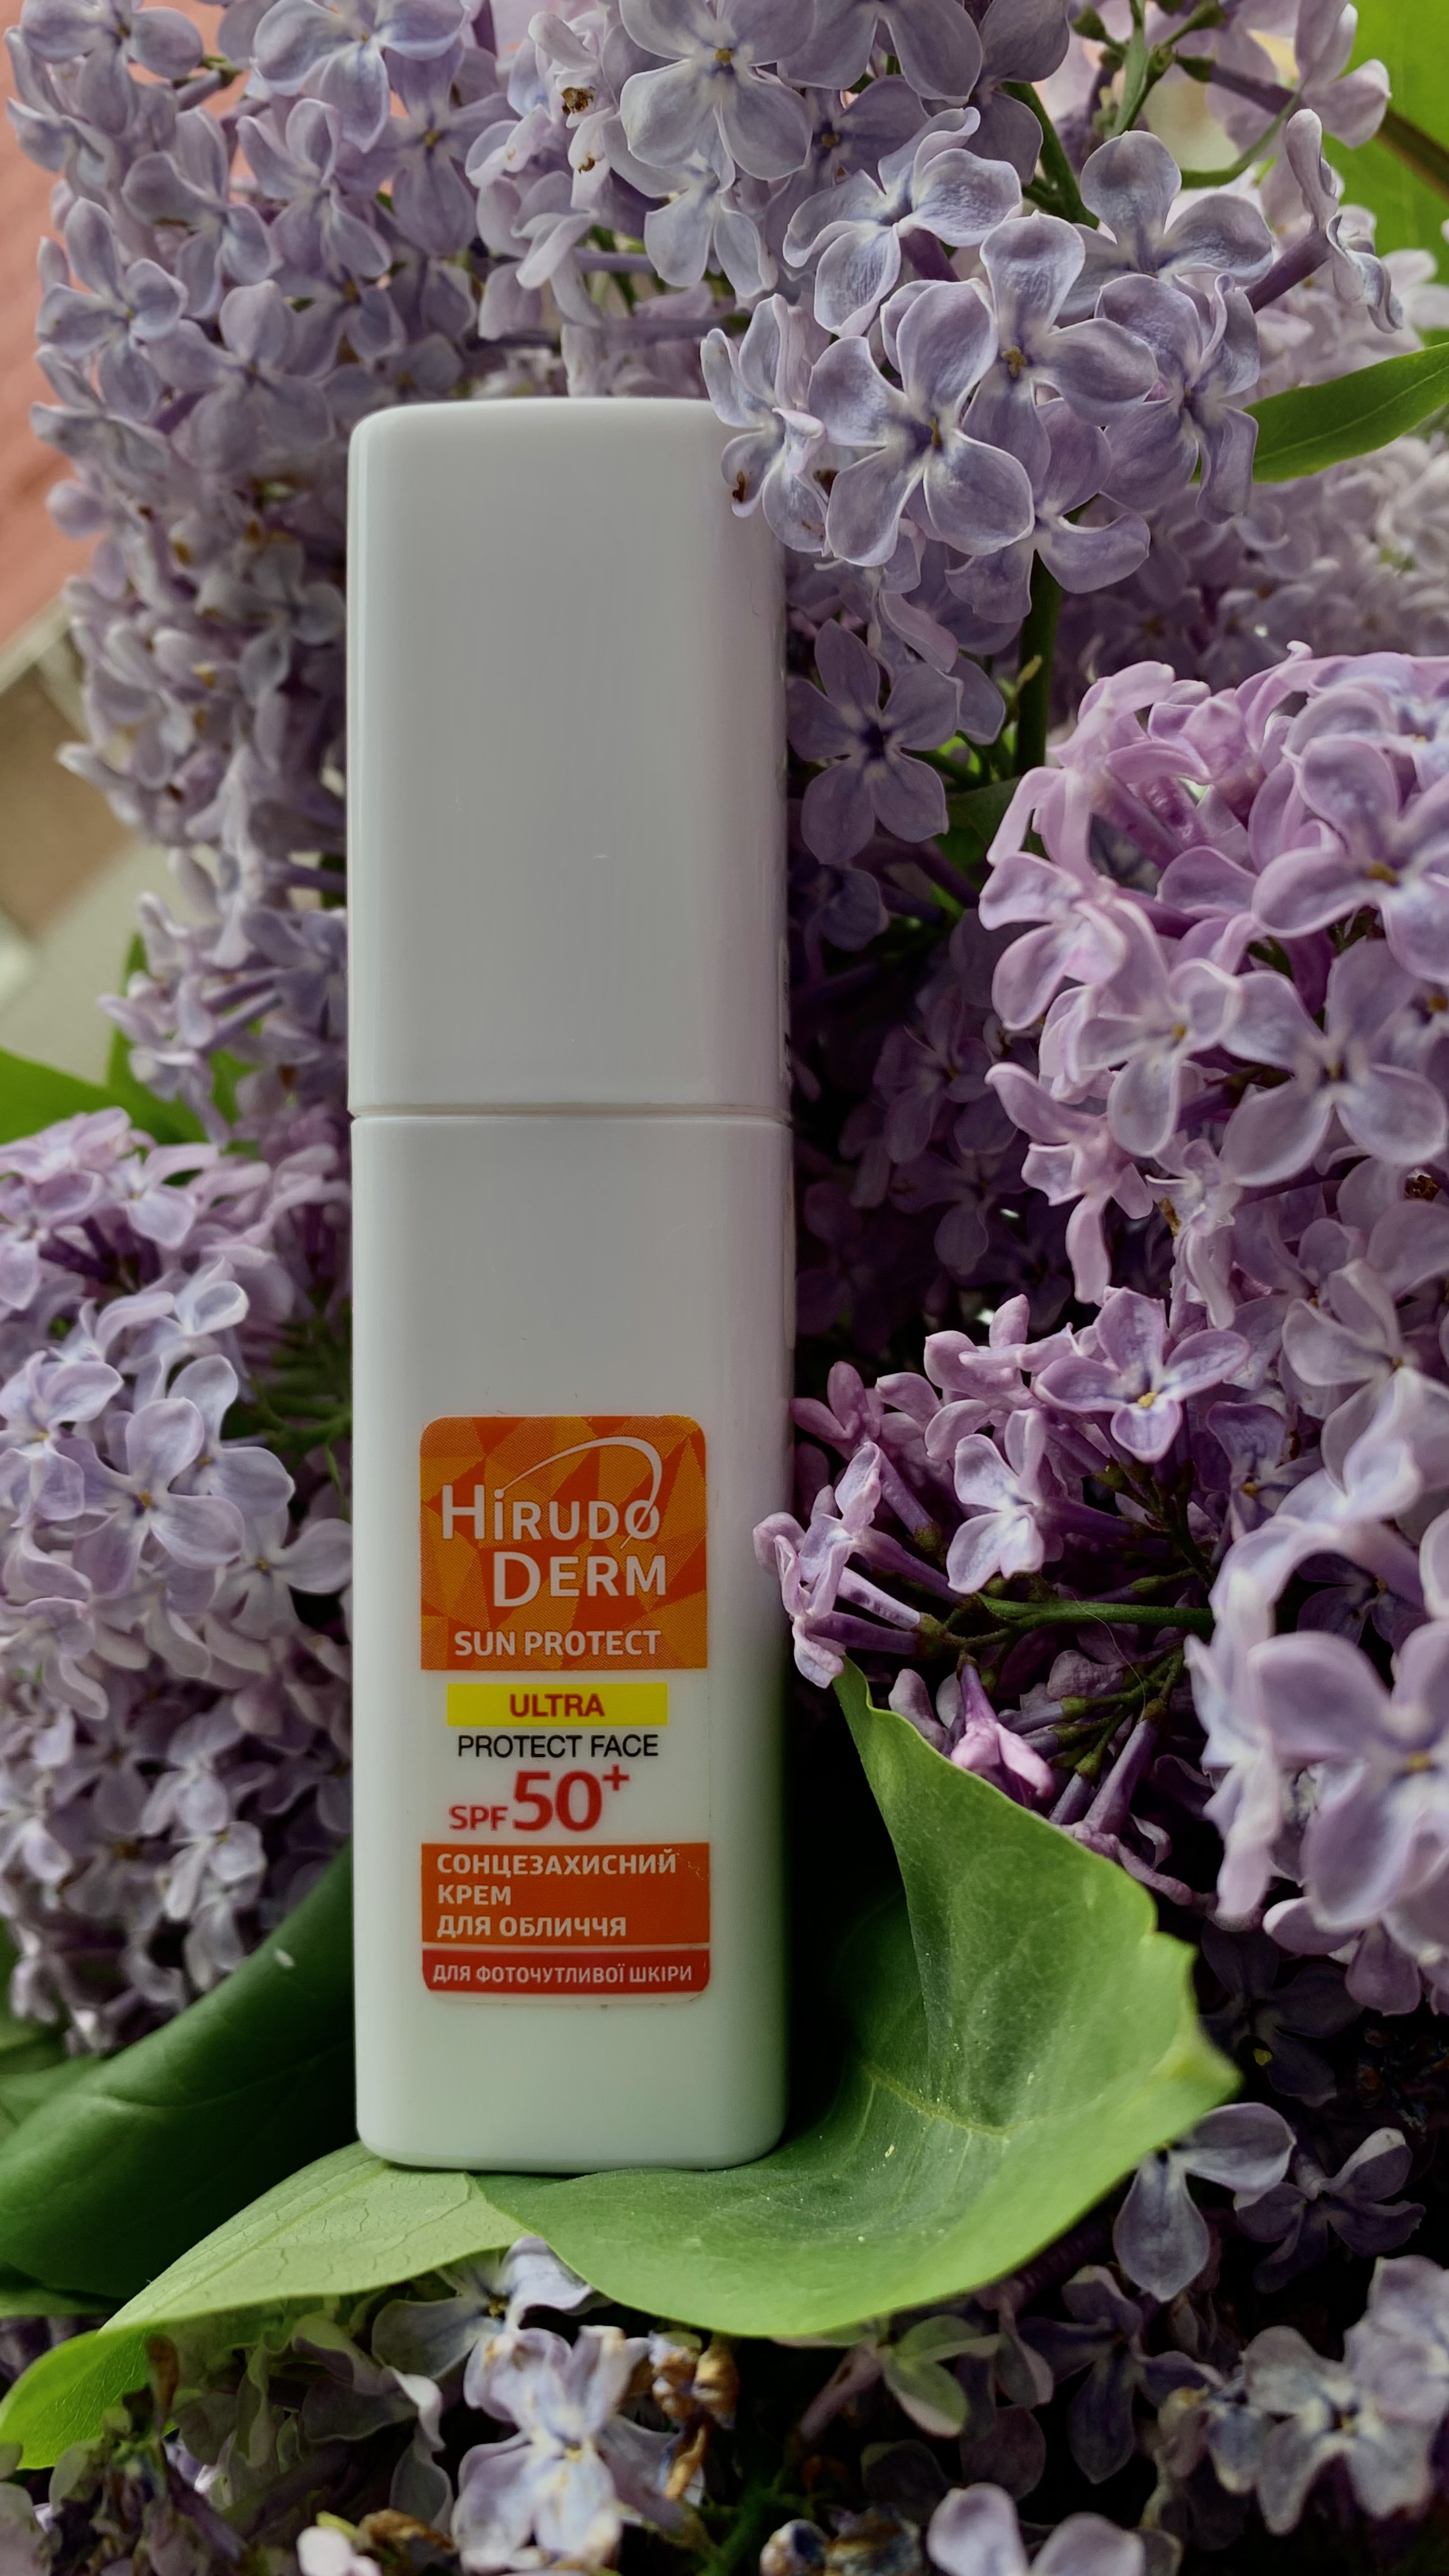 Мій фаворит цієї весни - Hirudo Derm Sun Protect Ultra Protect Face SPF 50+🪻